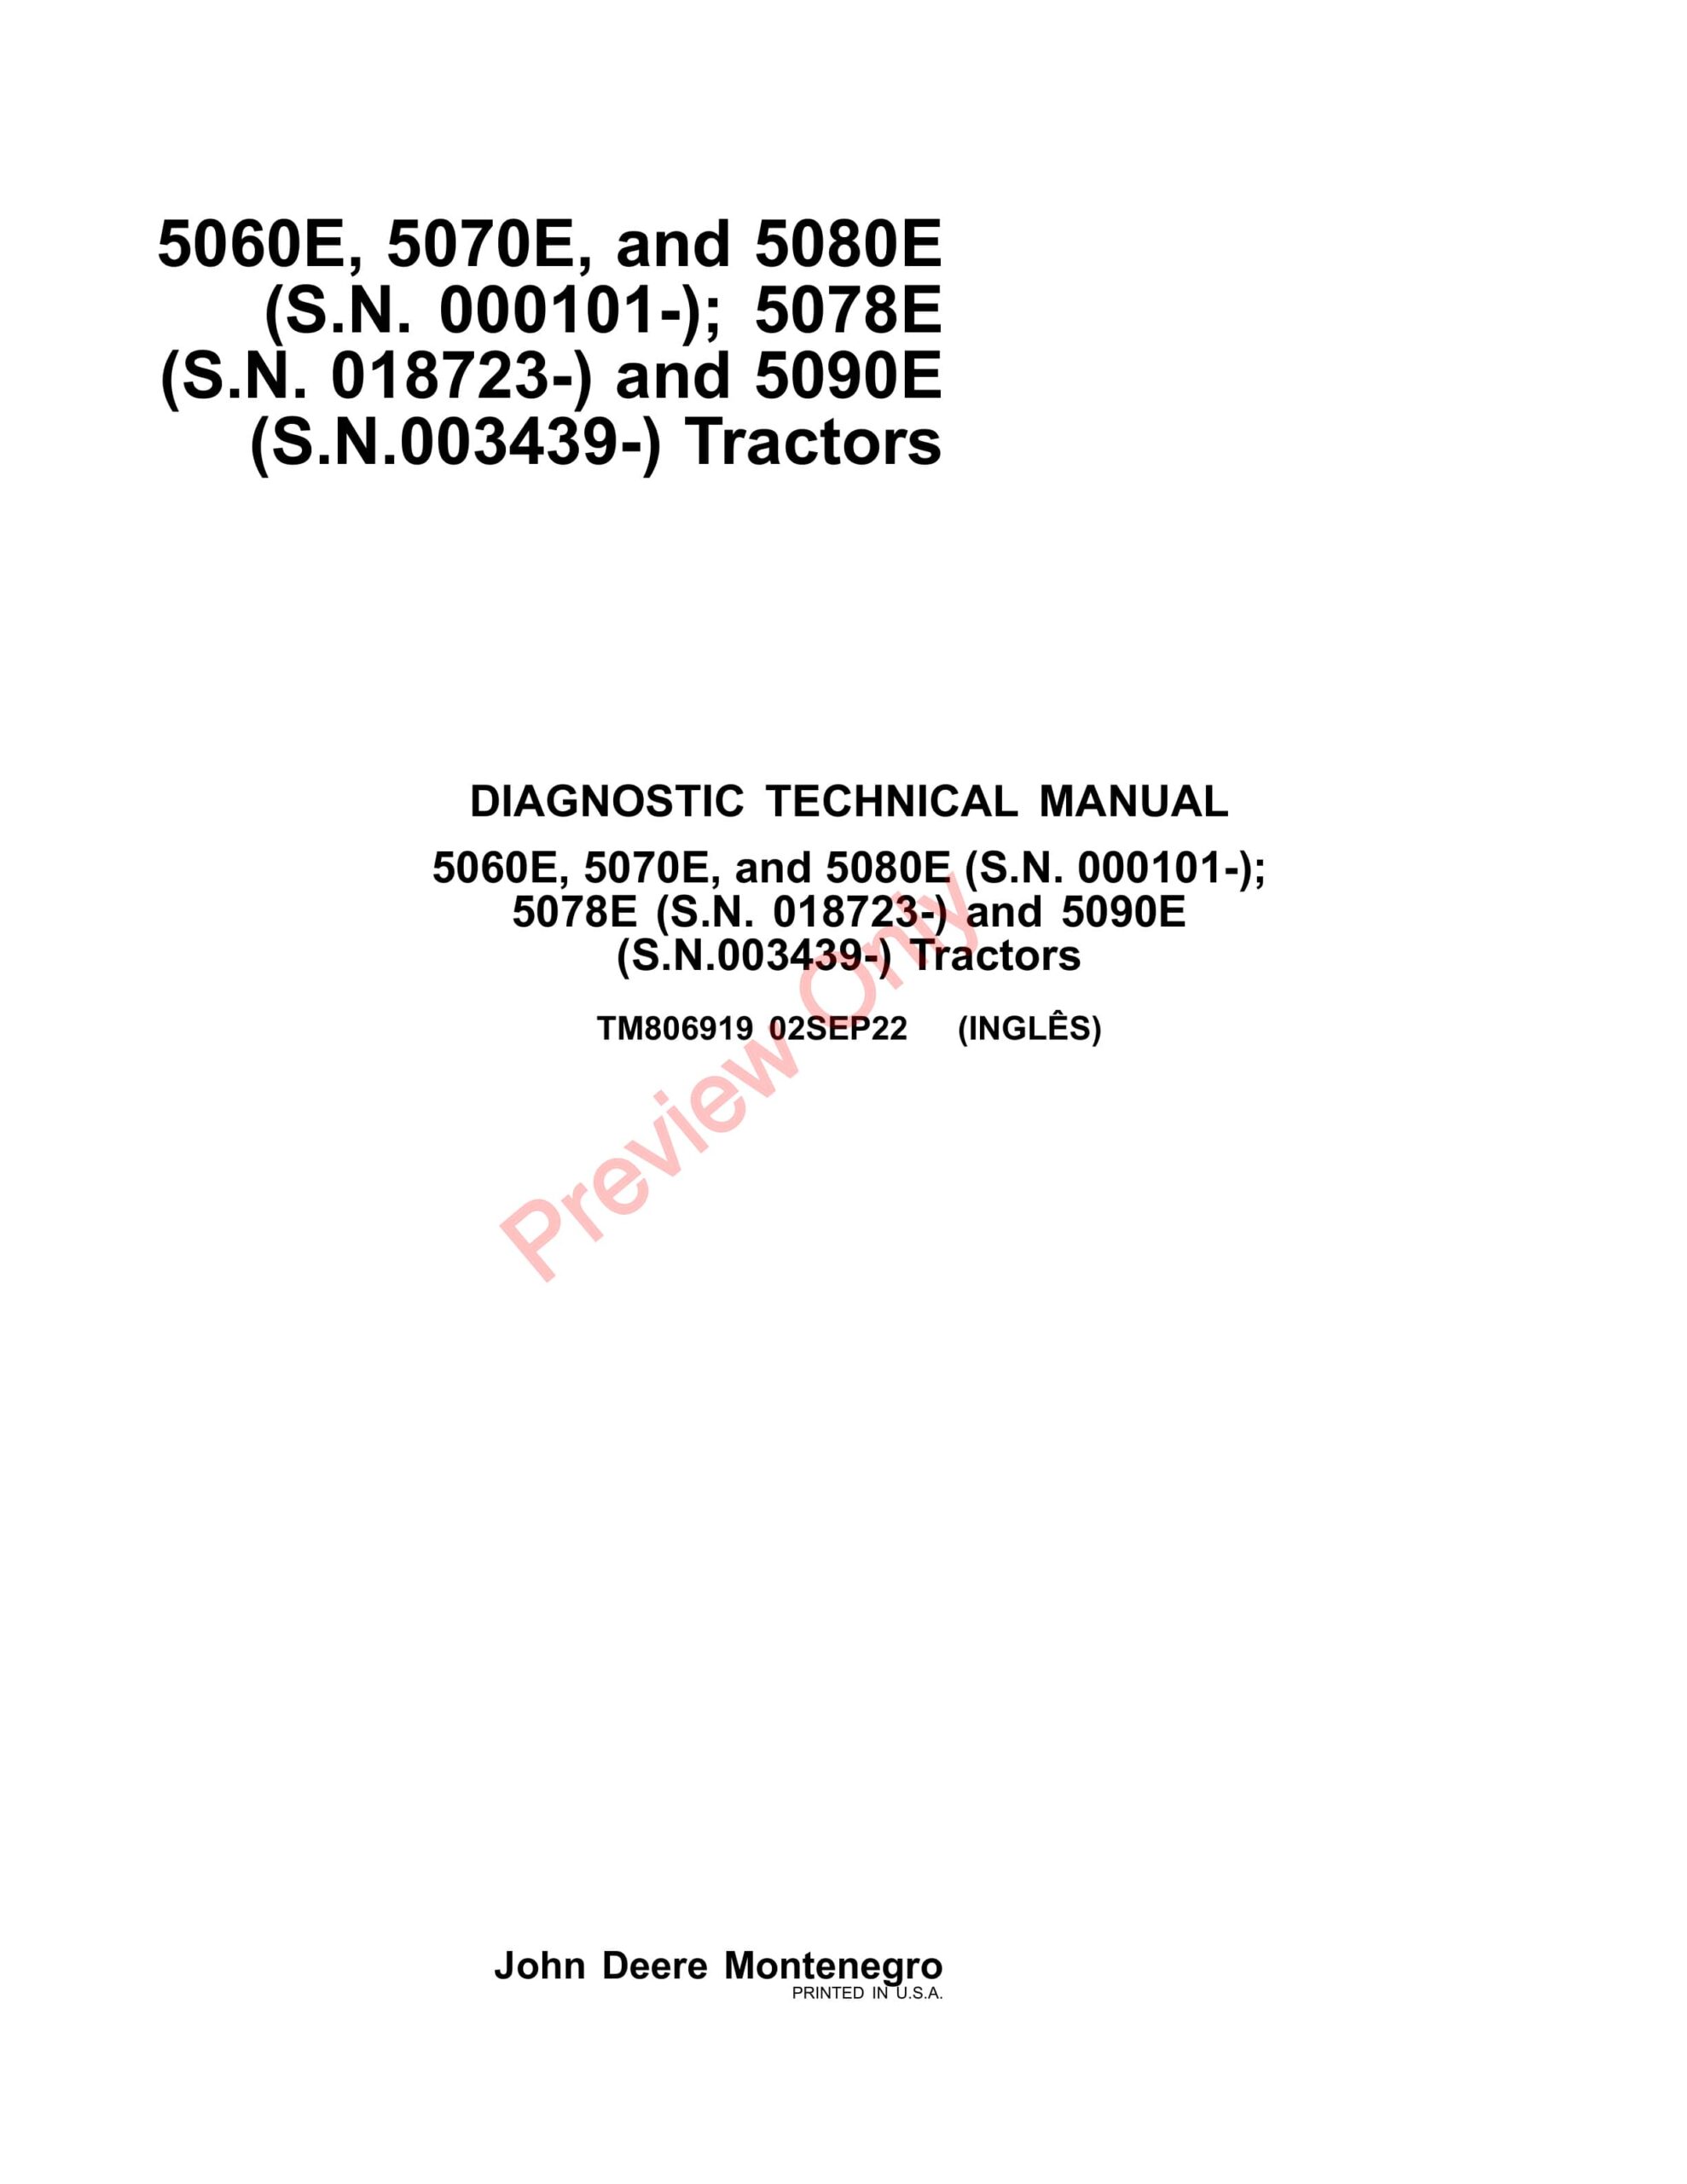 John Deere 5060E, 5070E, and 5080E (000101 Diagnostic Technical Manual TM806919 02SEP22-1